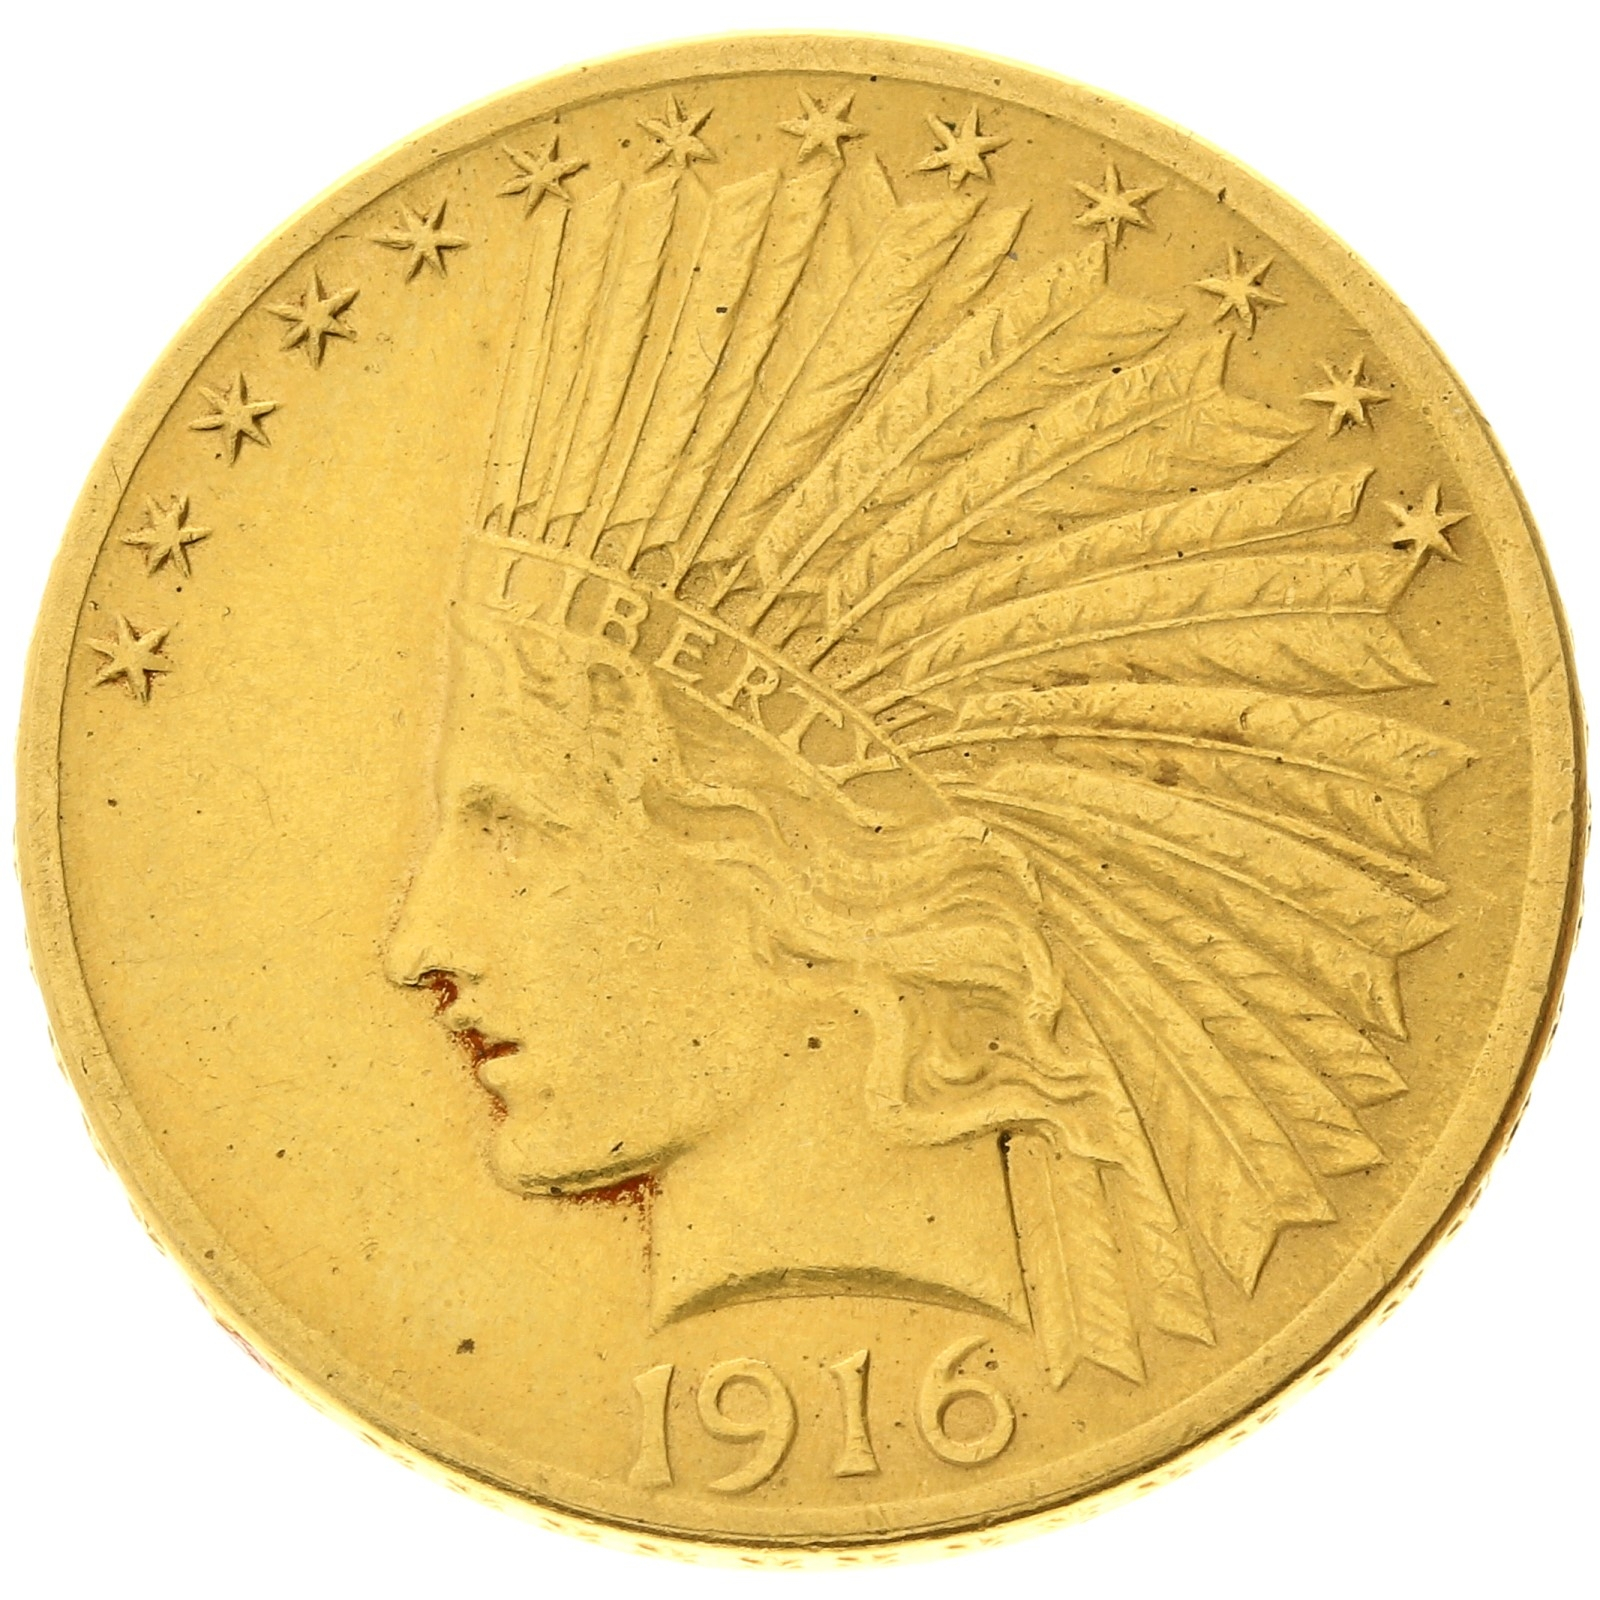 USA - 10 dollars - 1916 - S - Indian Head